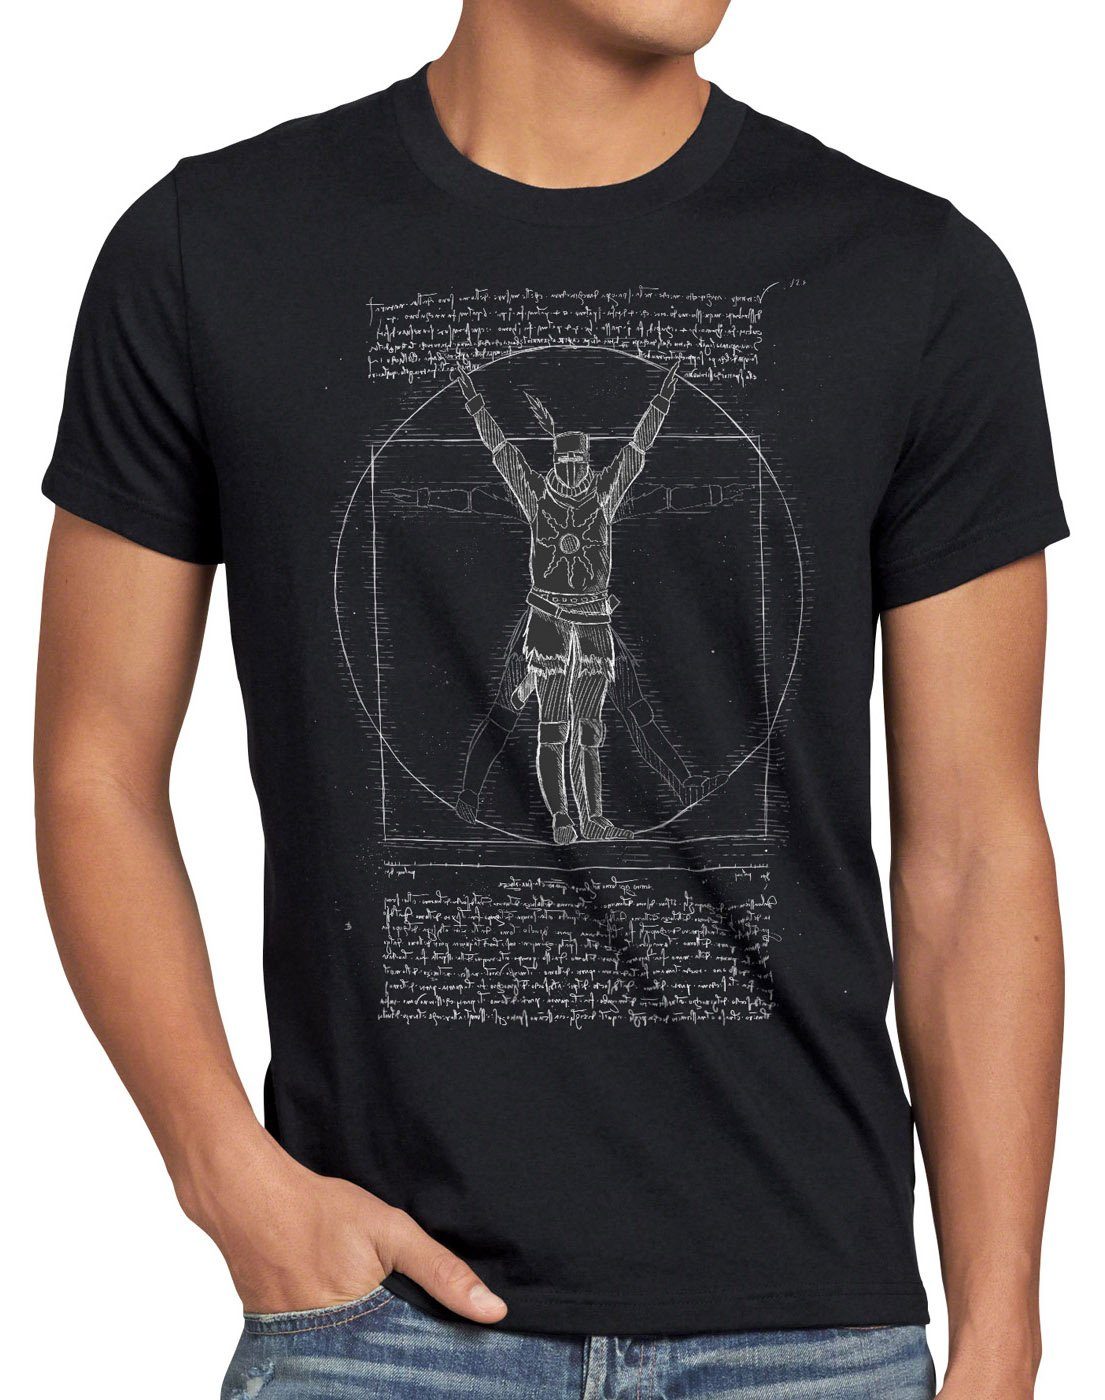 Solaire souls T-Shirt Herren Vitruvianischer sunbro Print-Shirt schwarz Astora of dark style3